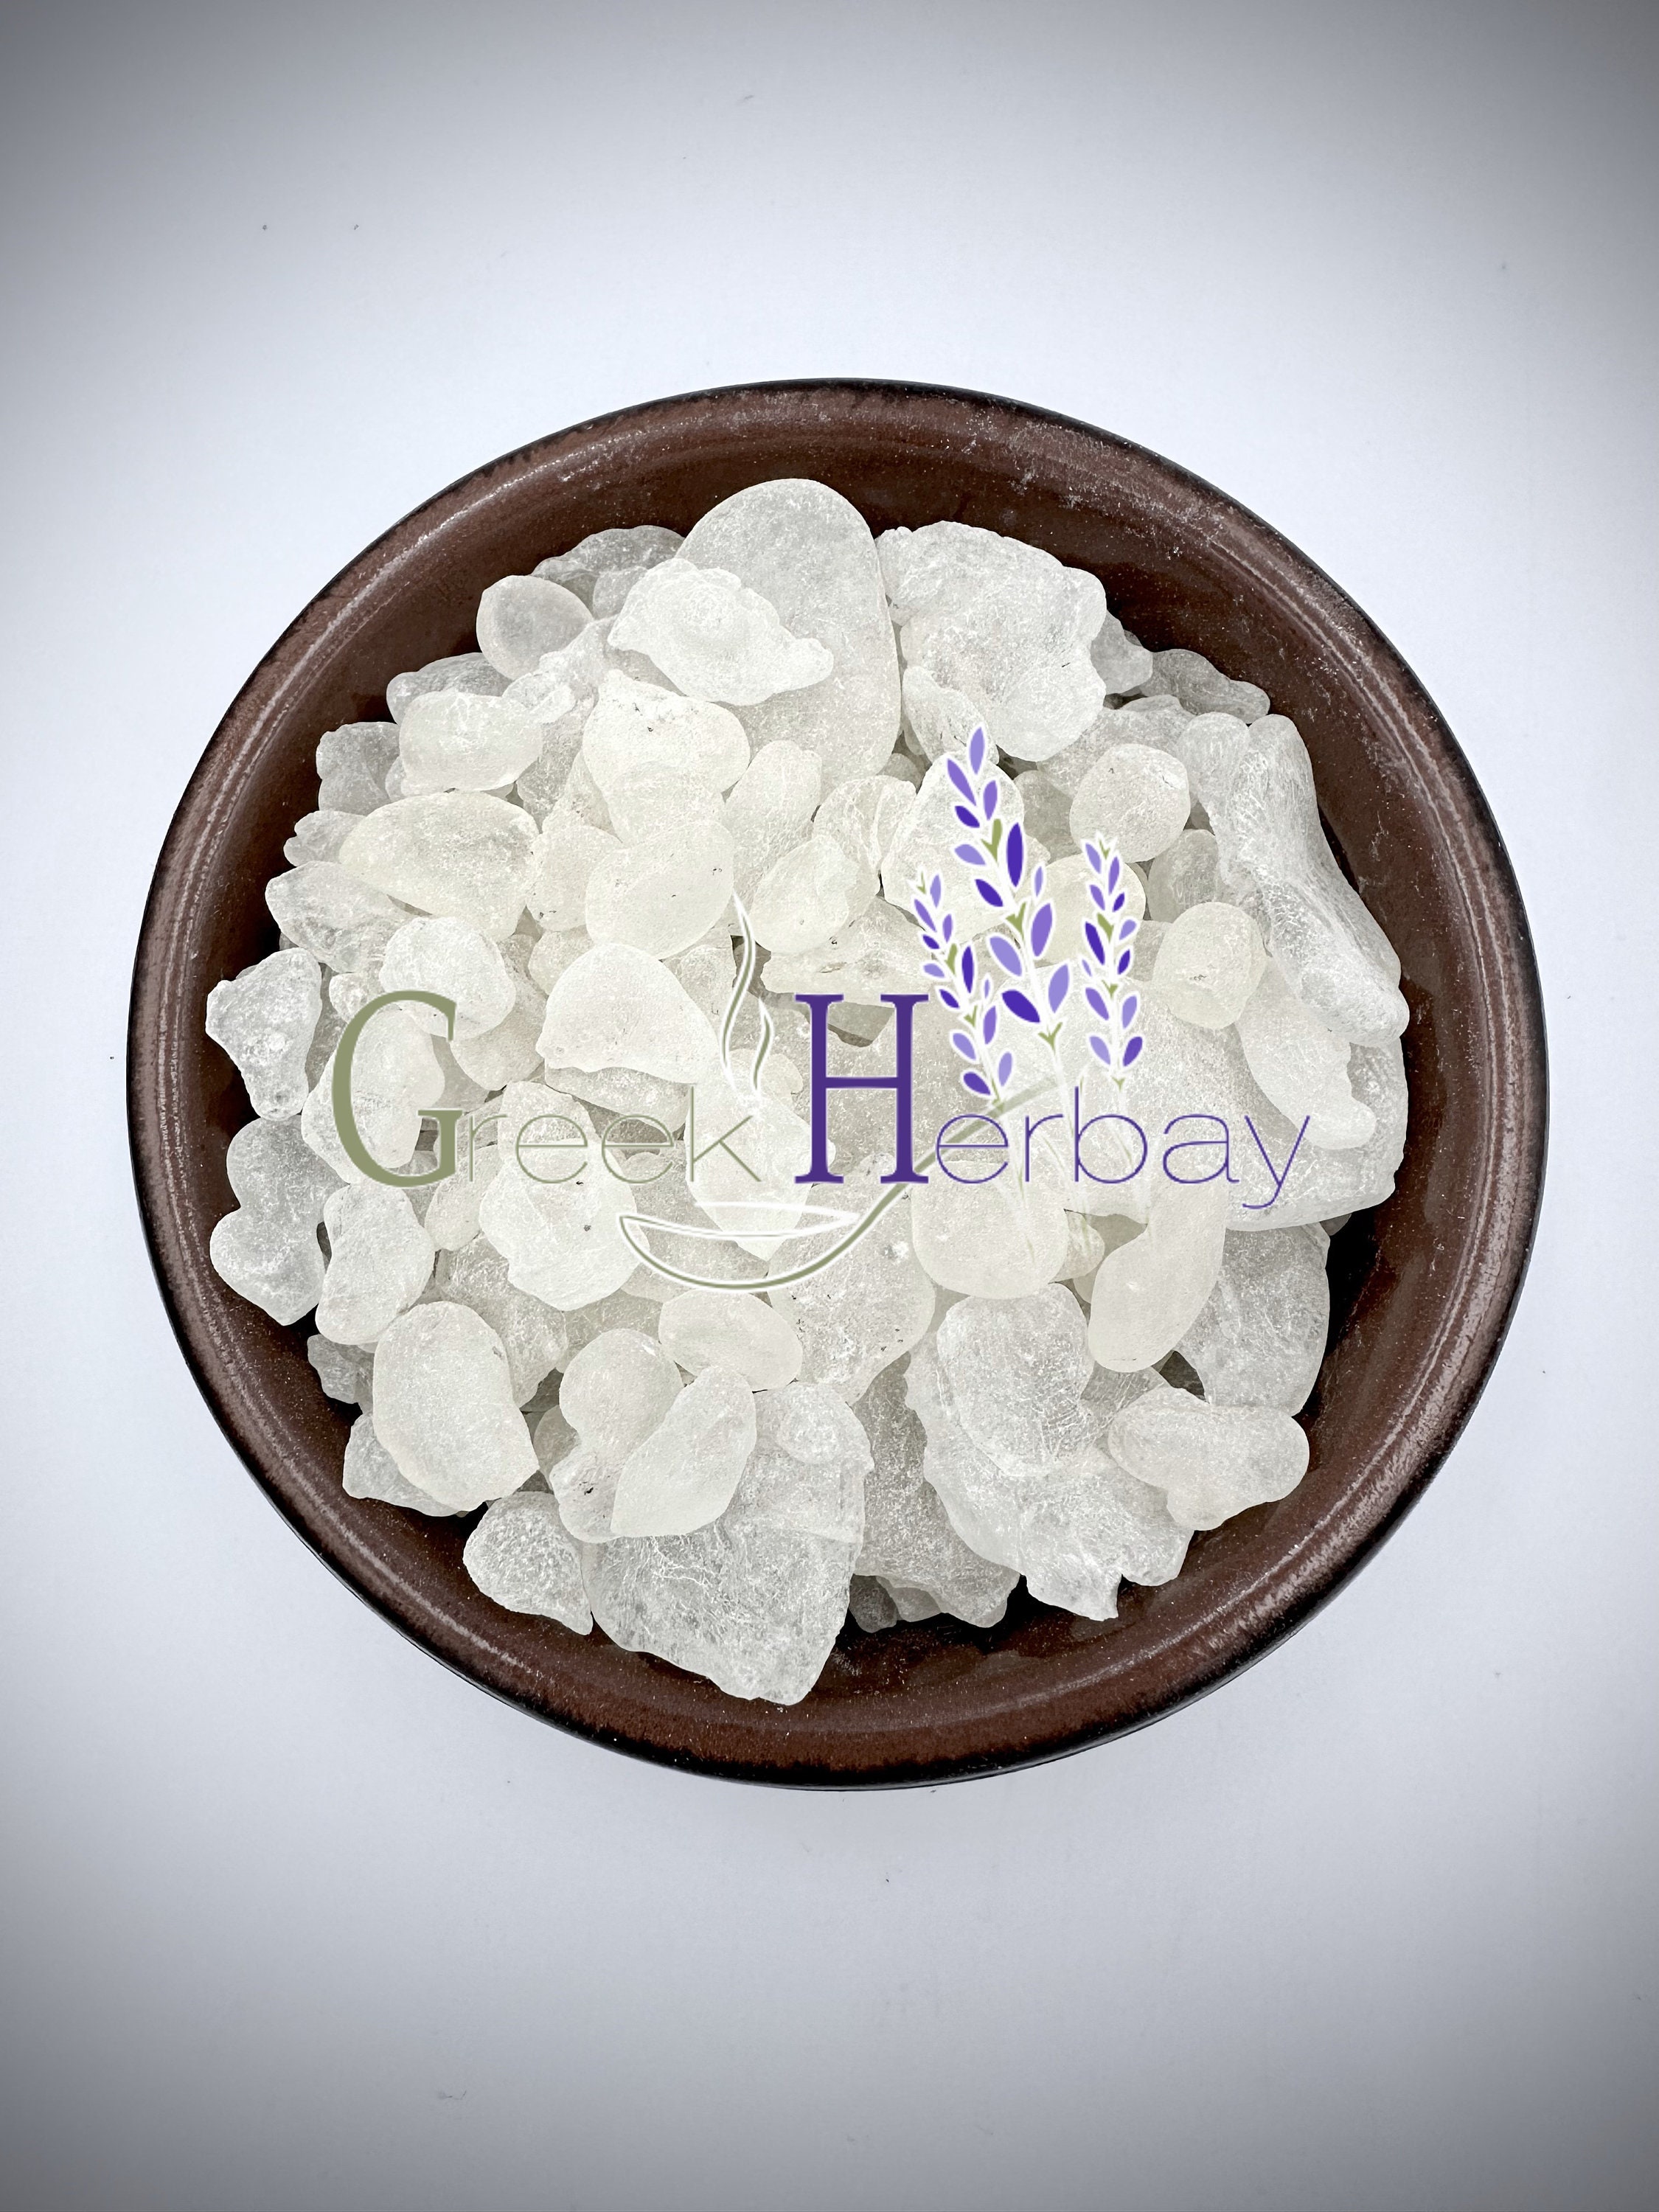 Greek Chios Mastic Gum Pistacia Lentiscus Medium & Large Tears Chewing Gum  Superior Quality Herbs PDO -  New Zealand